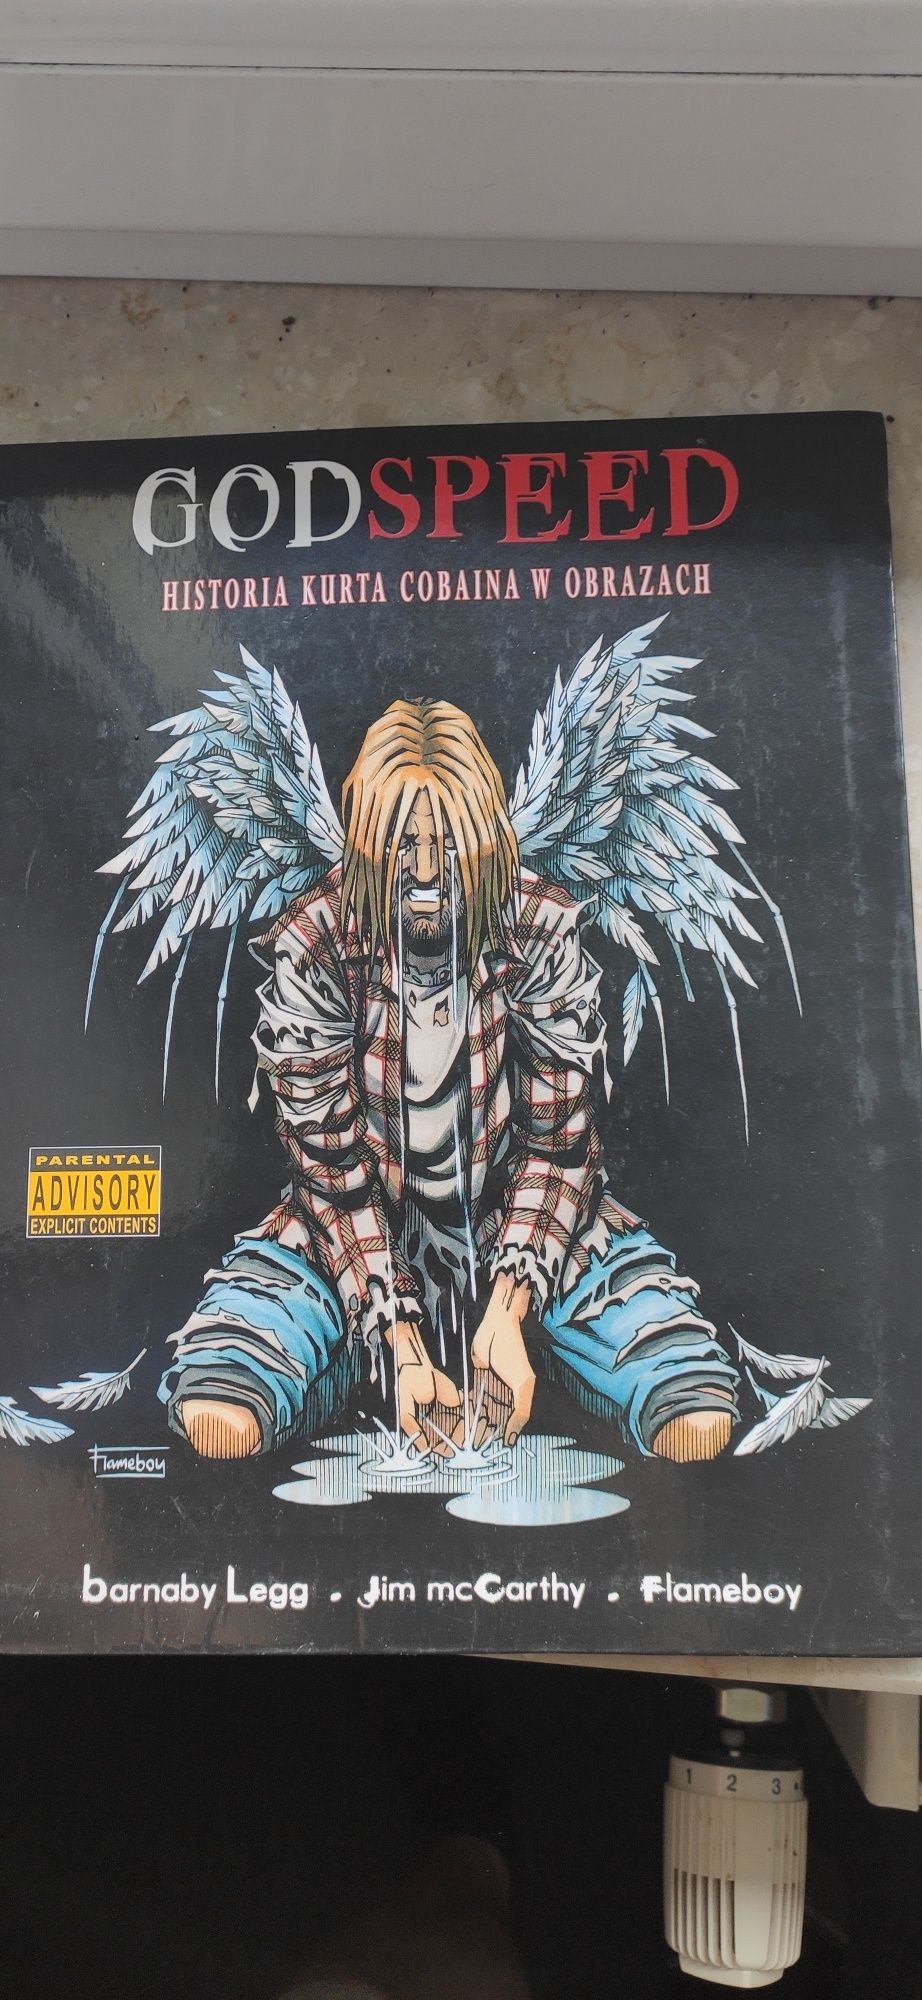 Goodspeed historia Kurta Cobaina w obrazach